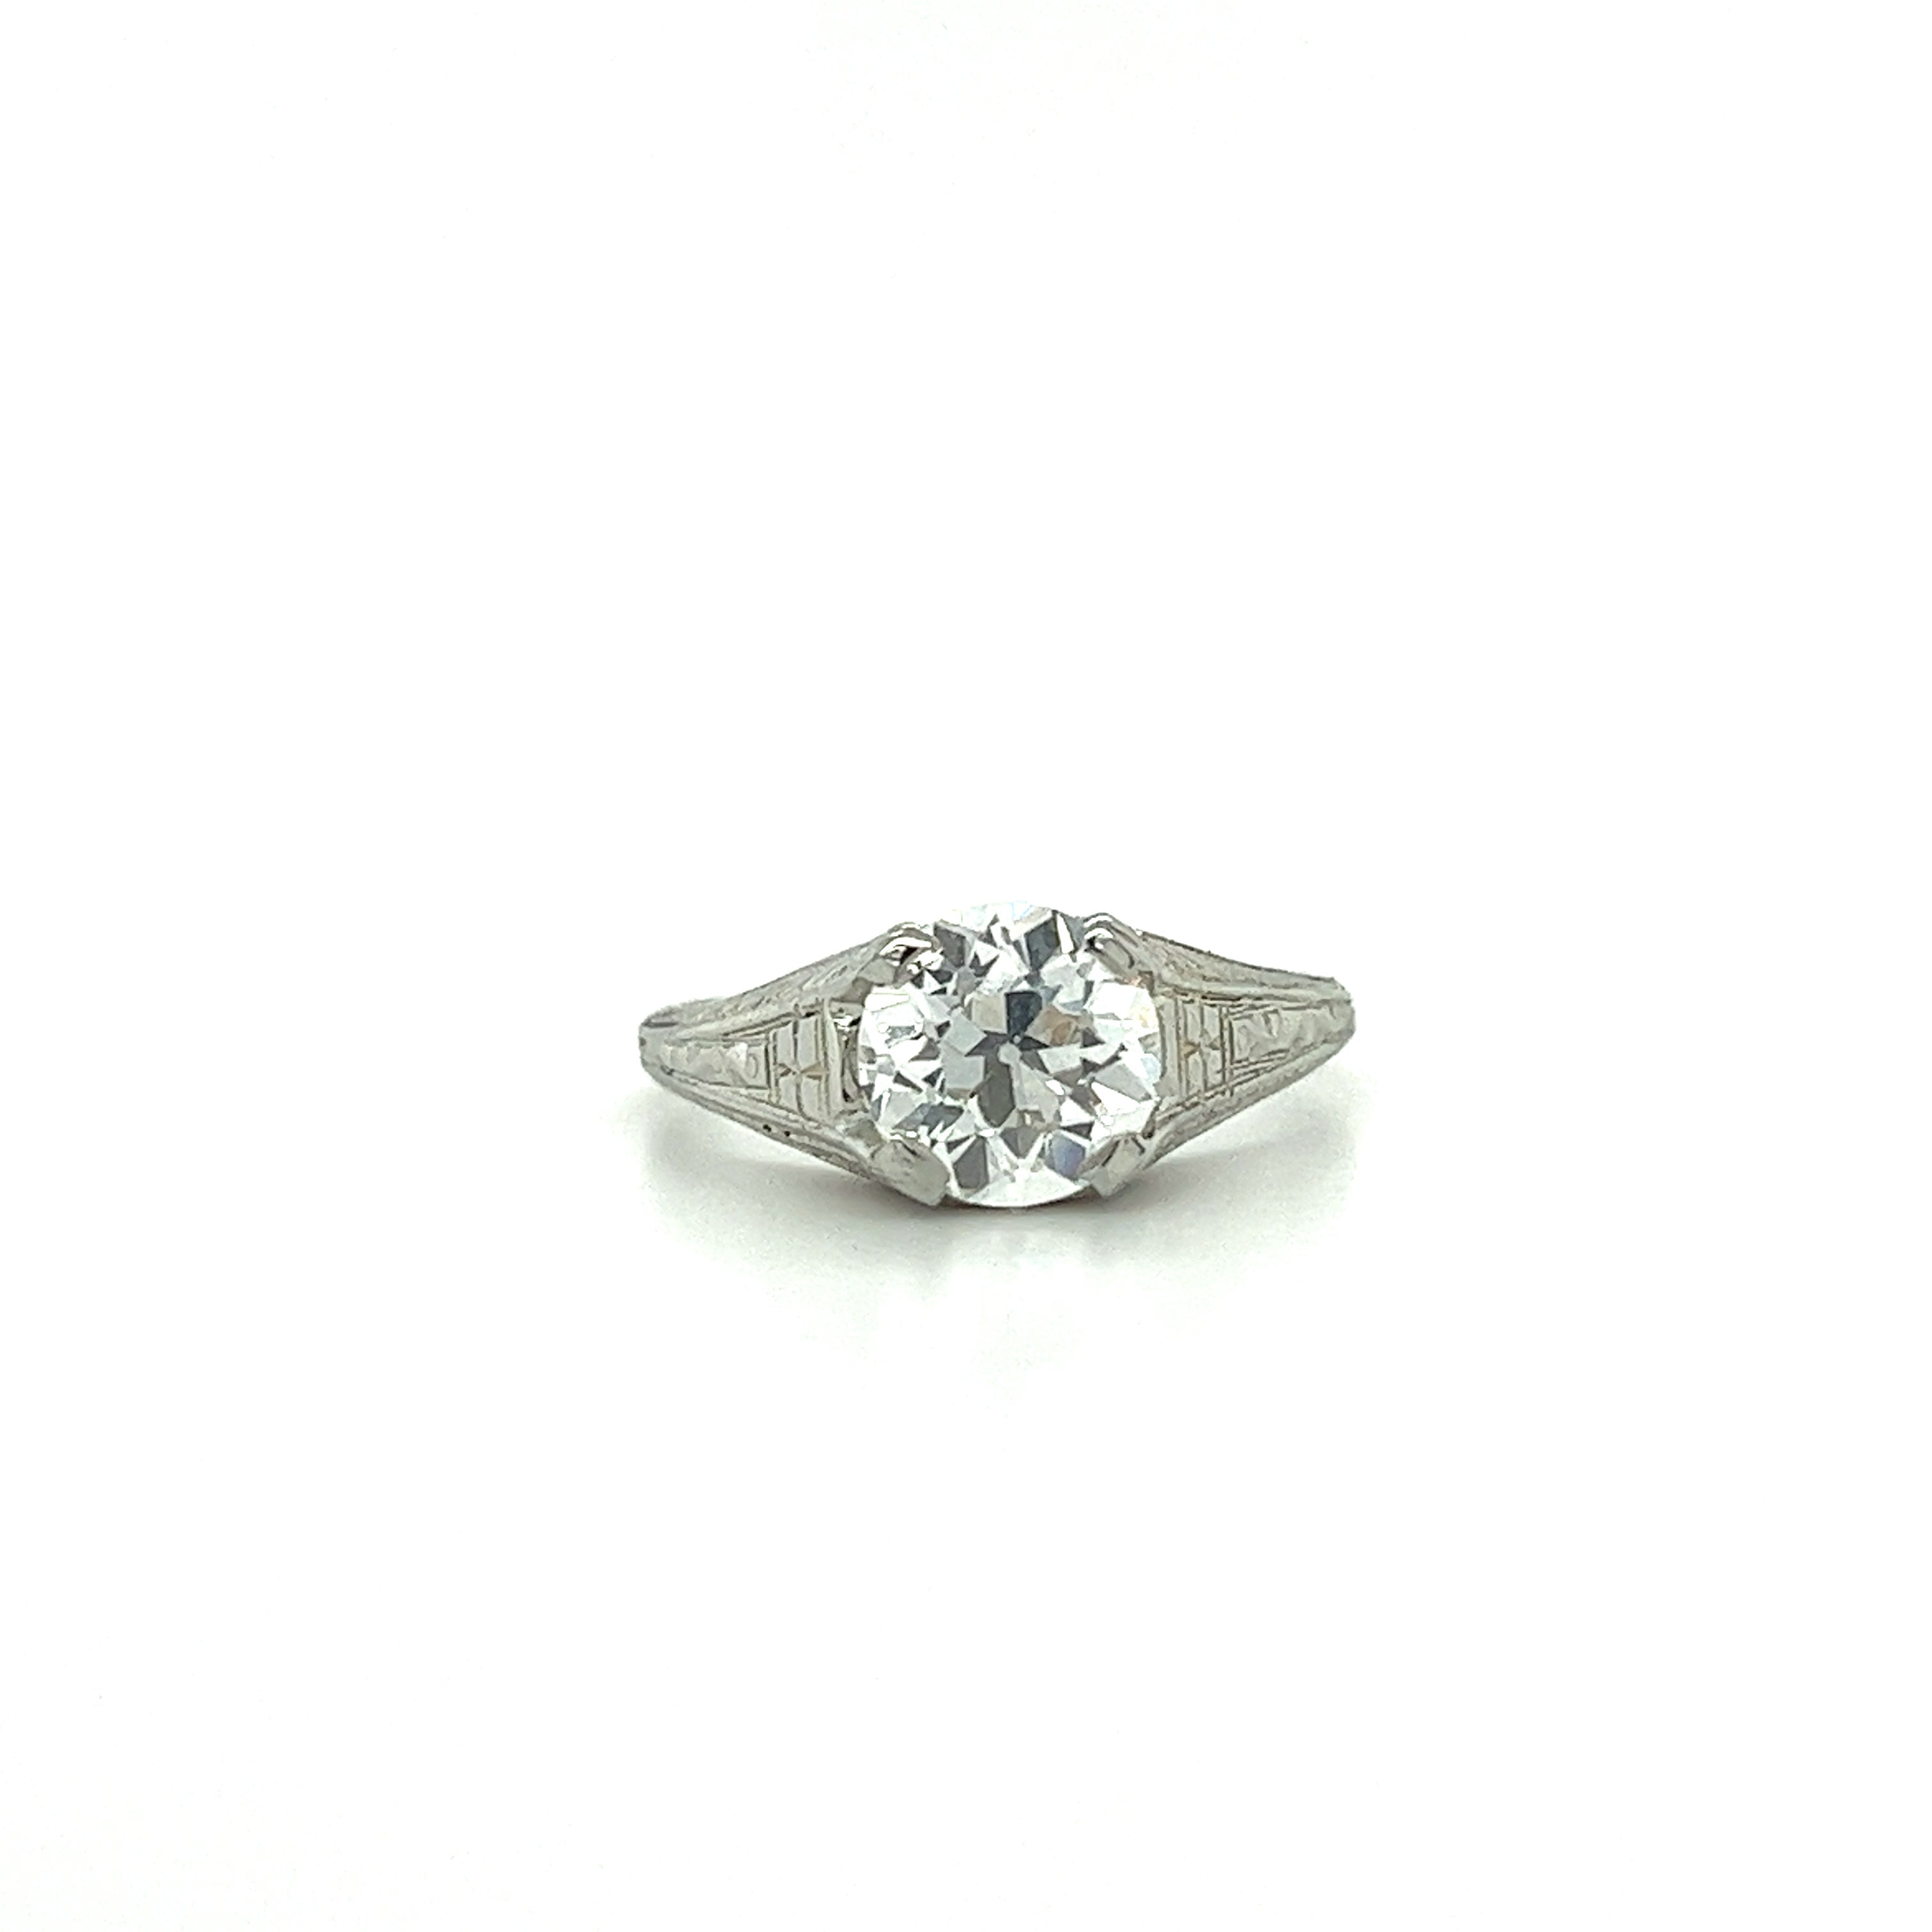 Art-Deco-Old-European-Cut-Vintage-Engagement-Ring-1_69ct-GVVS1-GIA-Engagement-Ring.jpg